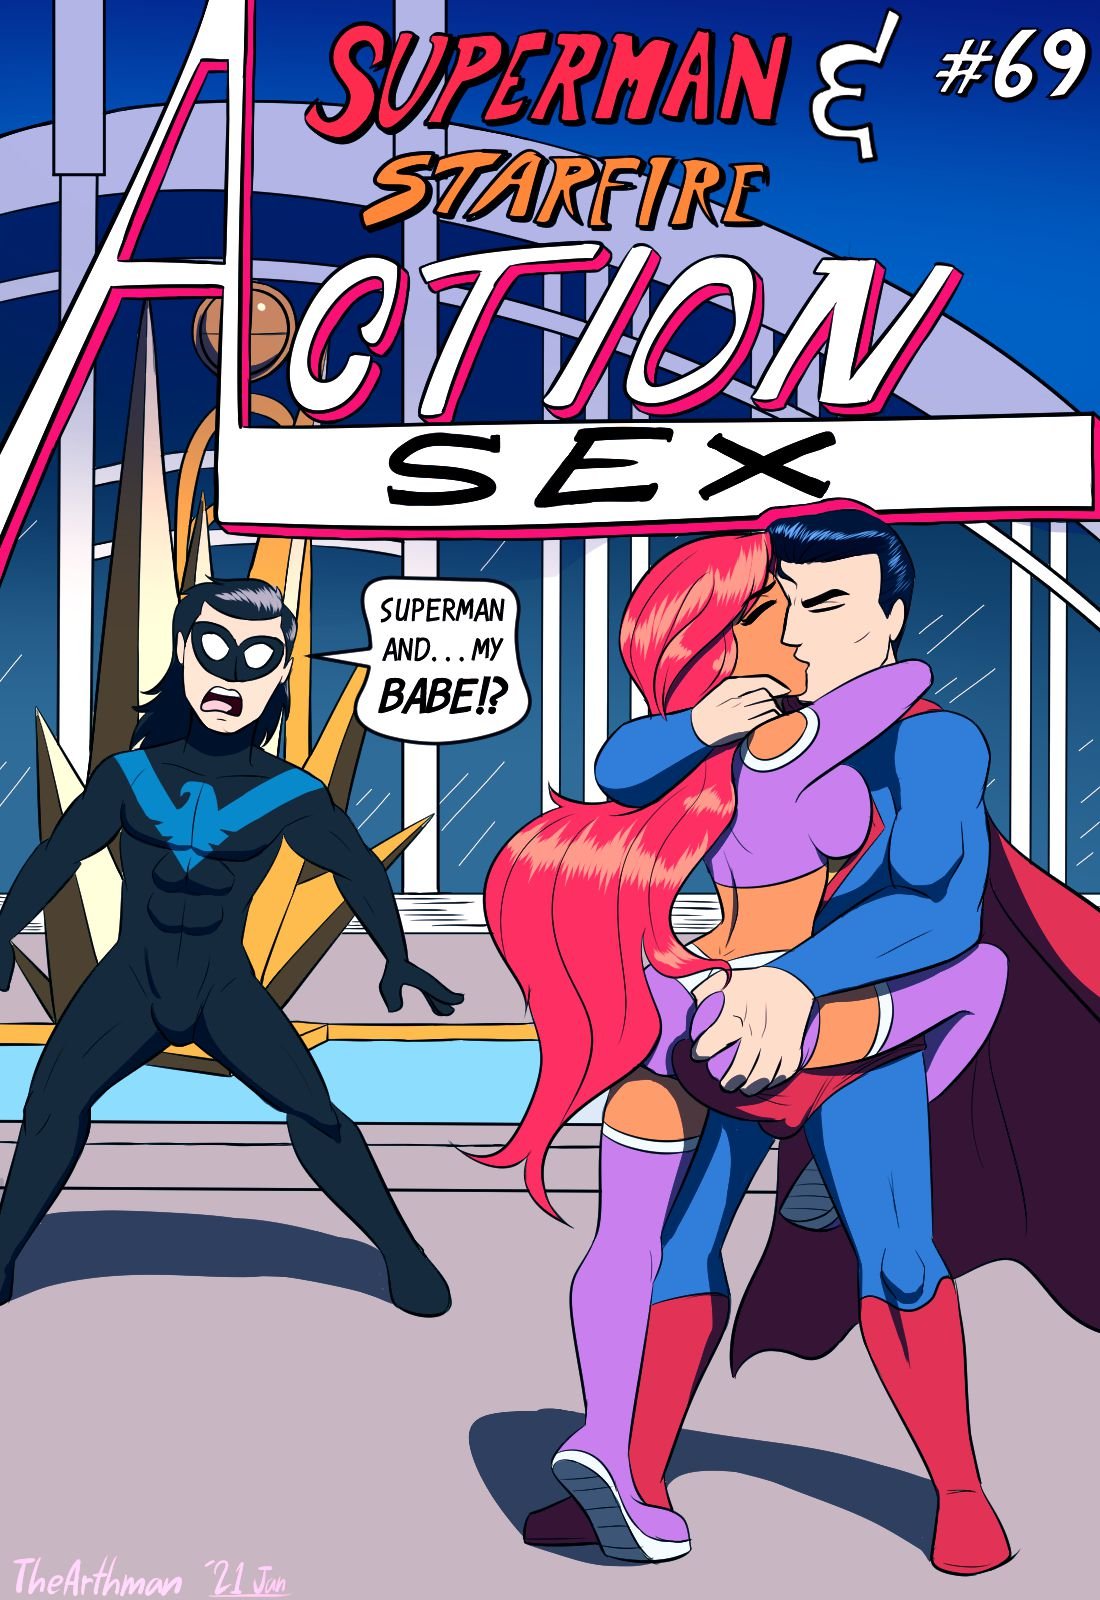 Action Sex (Justice League) The Arthman - 1  picture picture